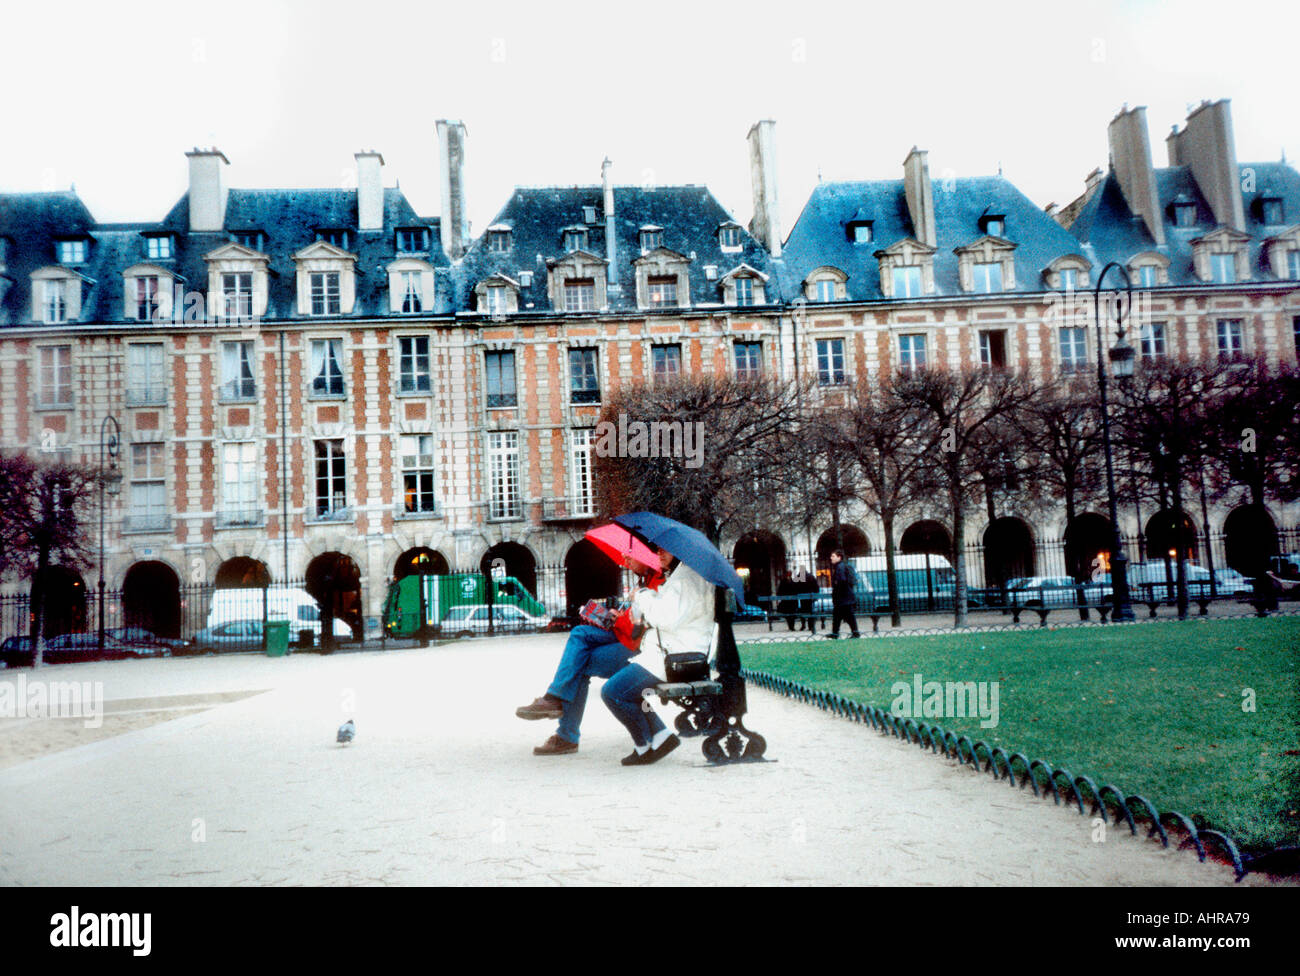 Paris Francia Parks Pareja sentada en el "banco de parques" con sombrillas en la "Place des Vosges" "Arquitectura histórica" le Marais Foto de stock